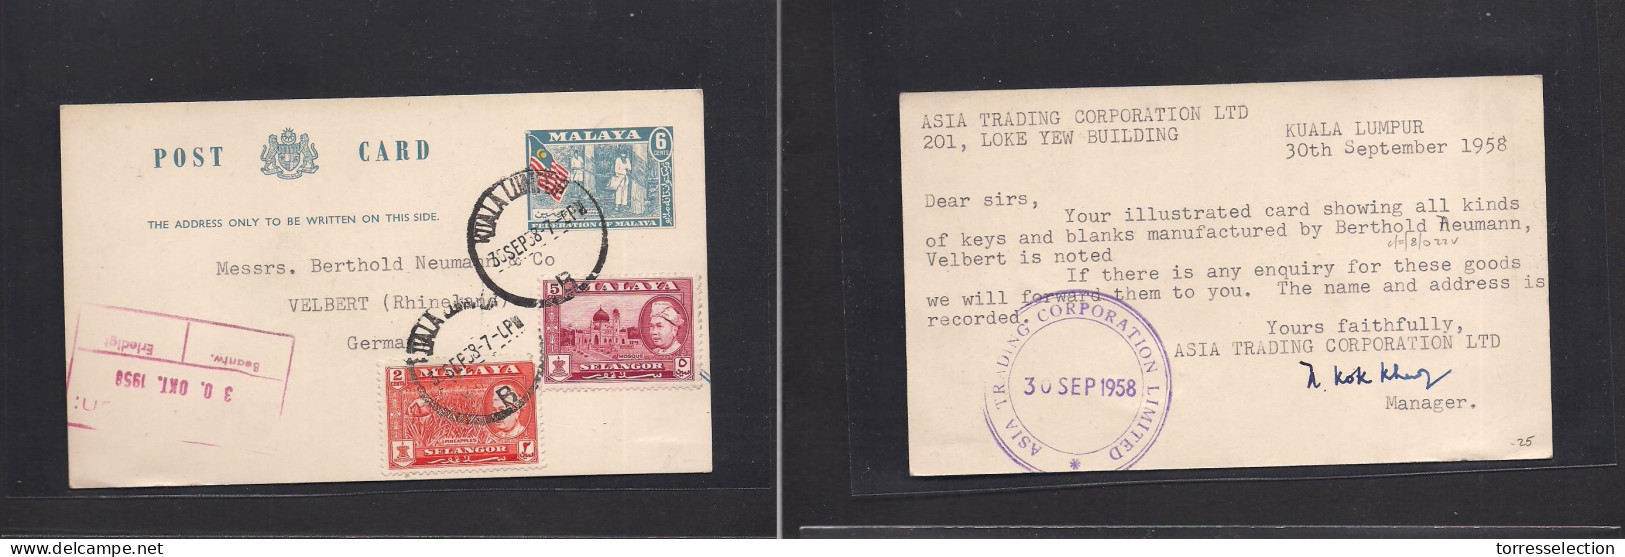 MALAYSIA. 1958 (30 Sept) KL - Germany, Velbut (30 Oct) 6c Blue Stat Card + 2 Adtls. Fine Used. - Malaysia (1964-...)